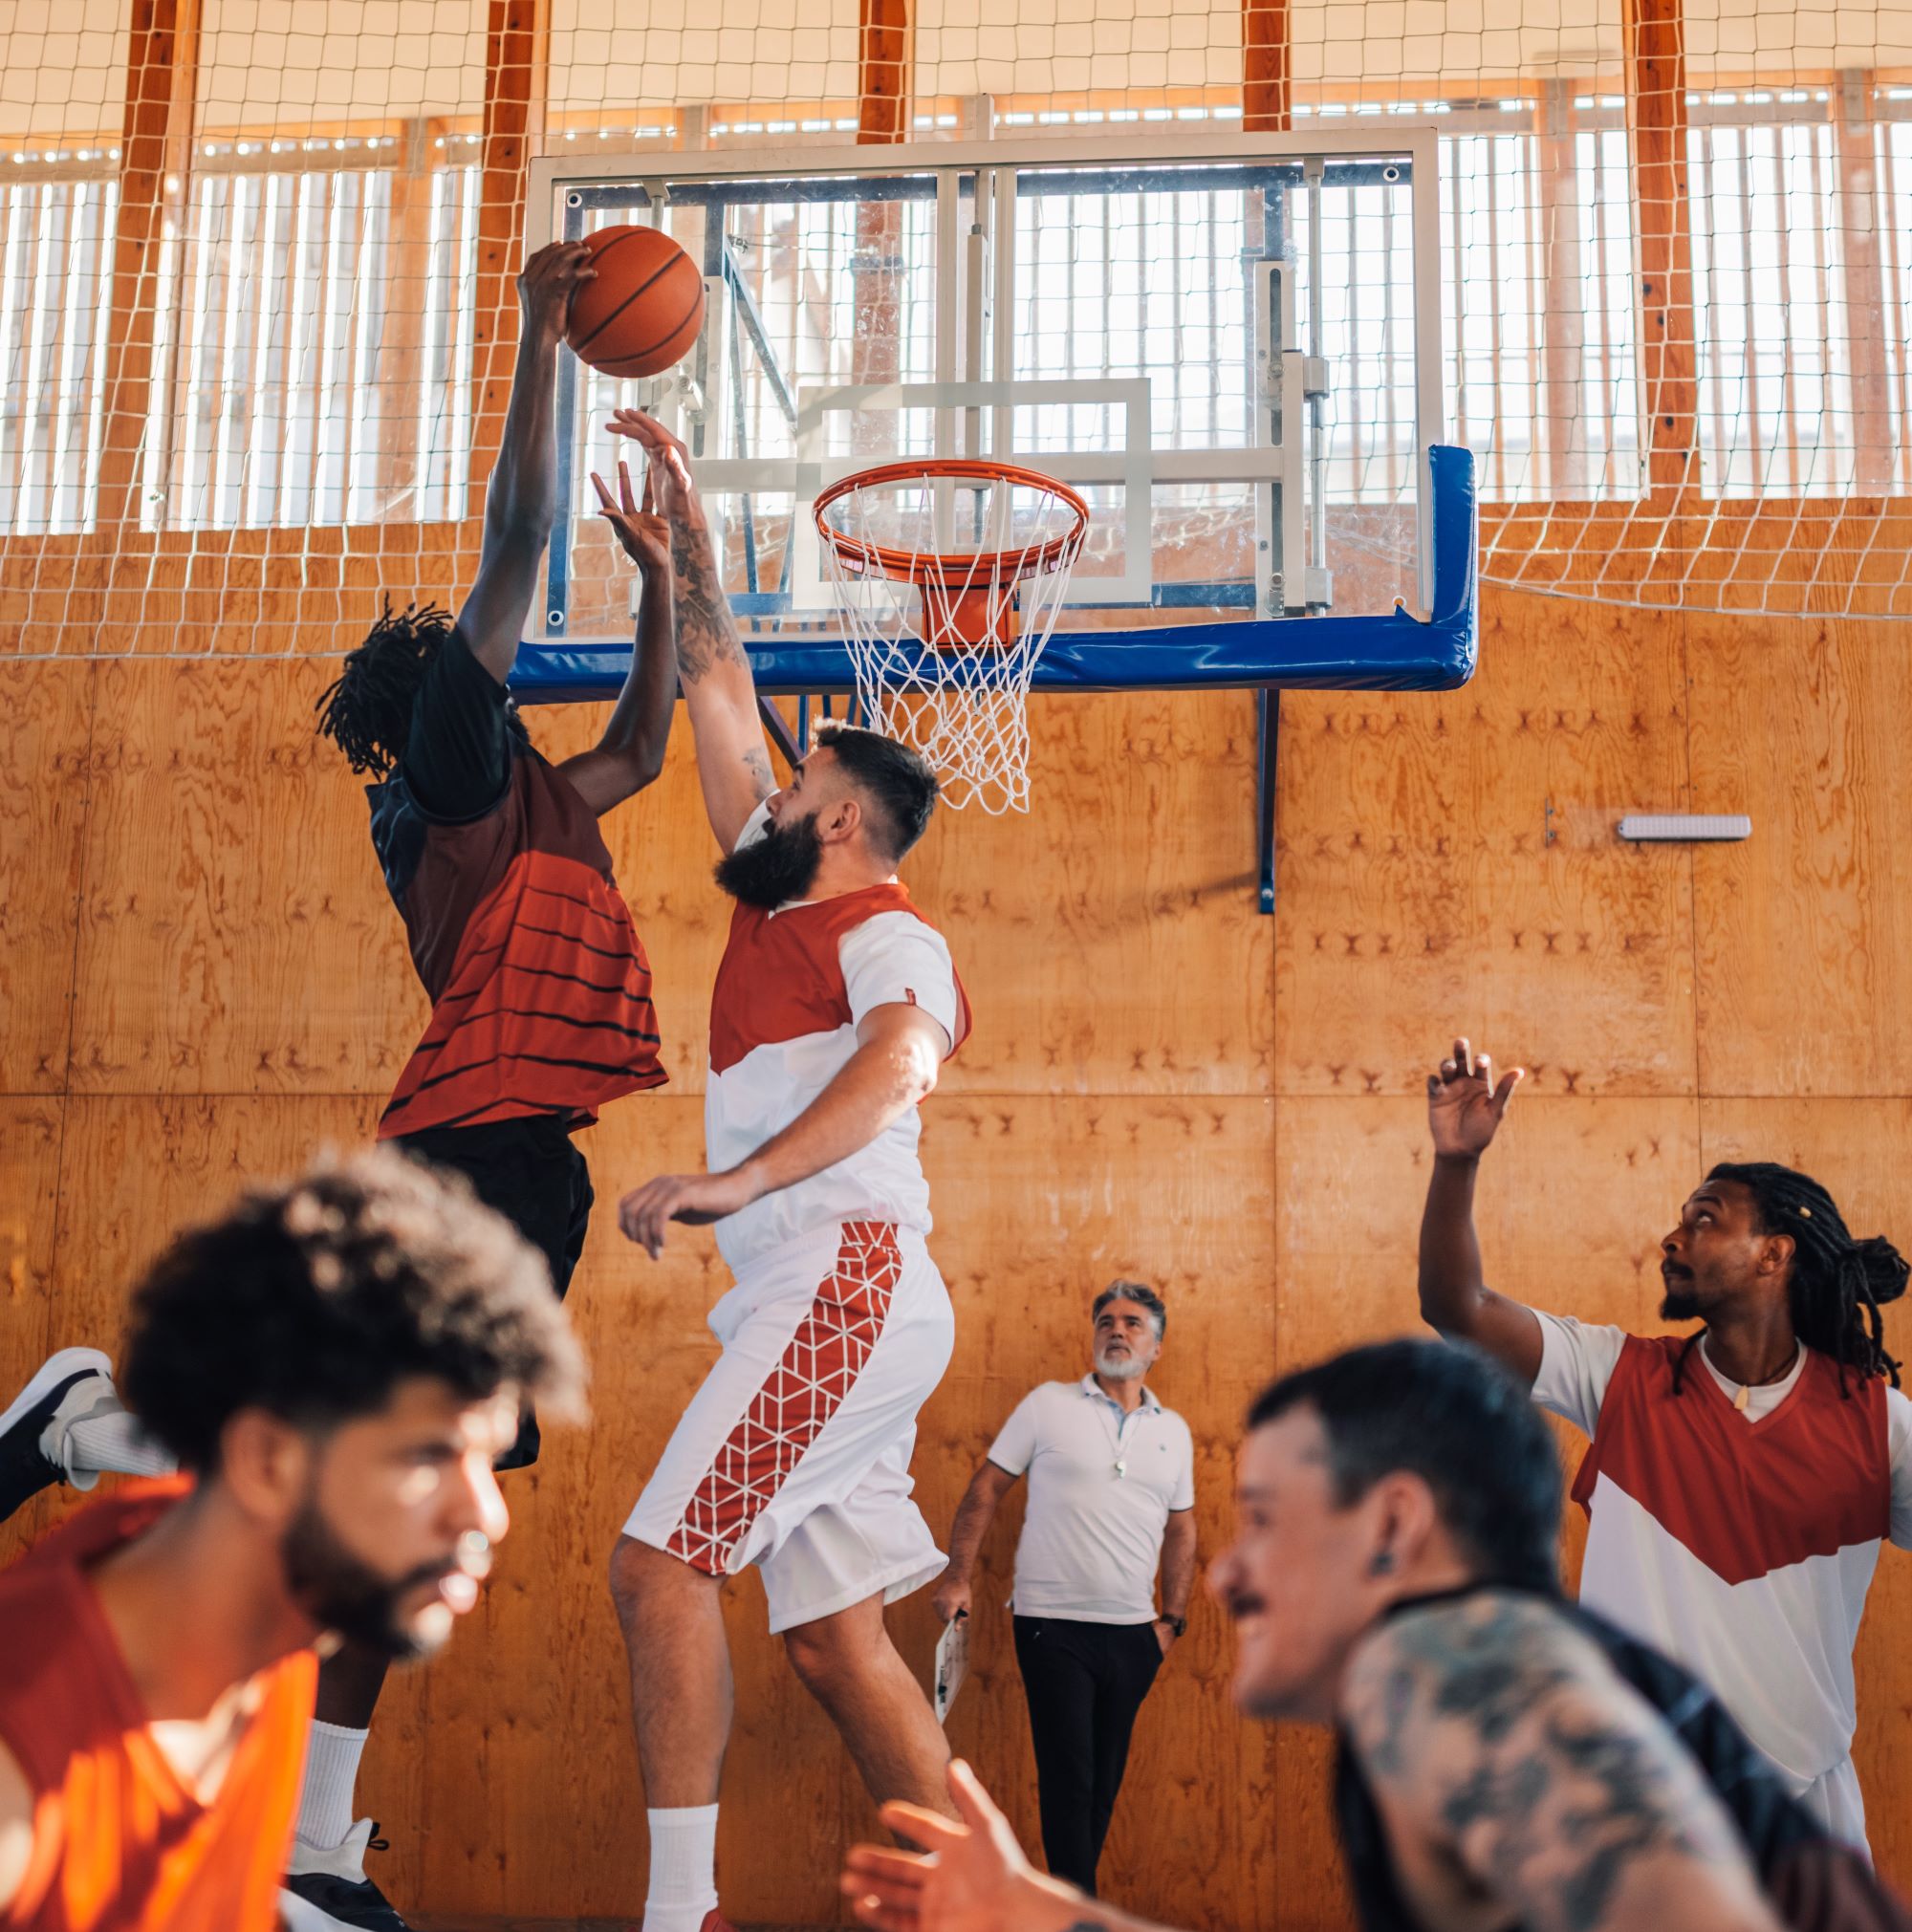 Men playing basketball in a school gym